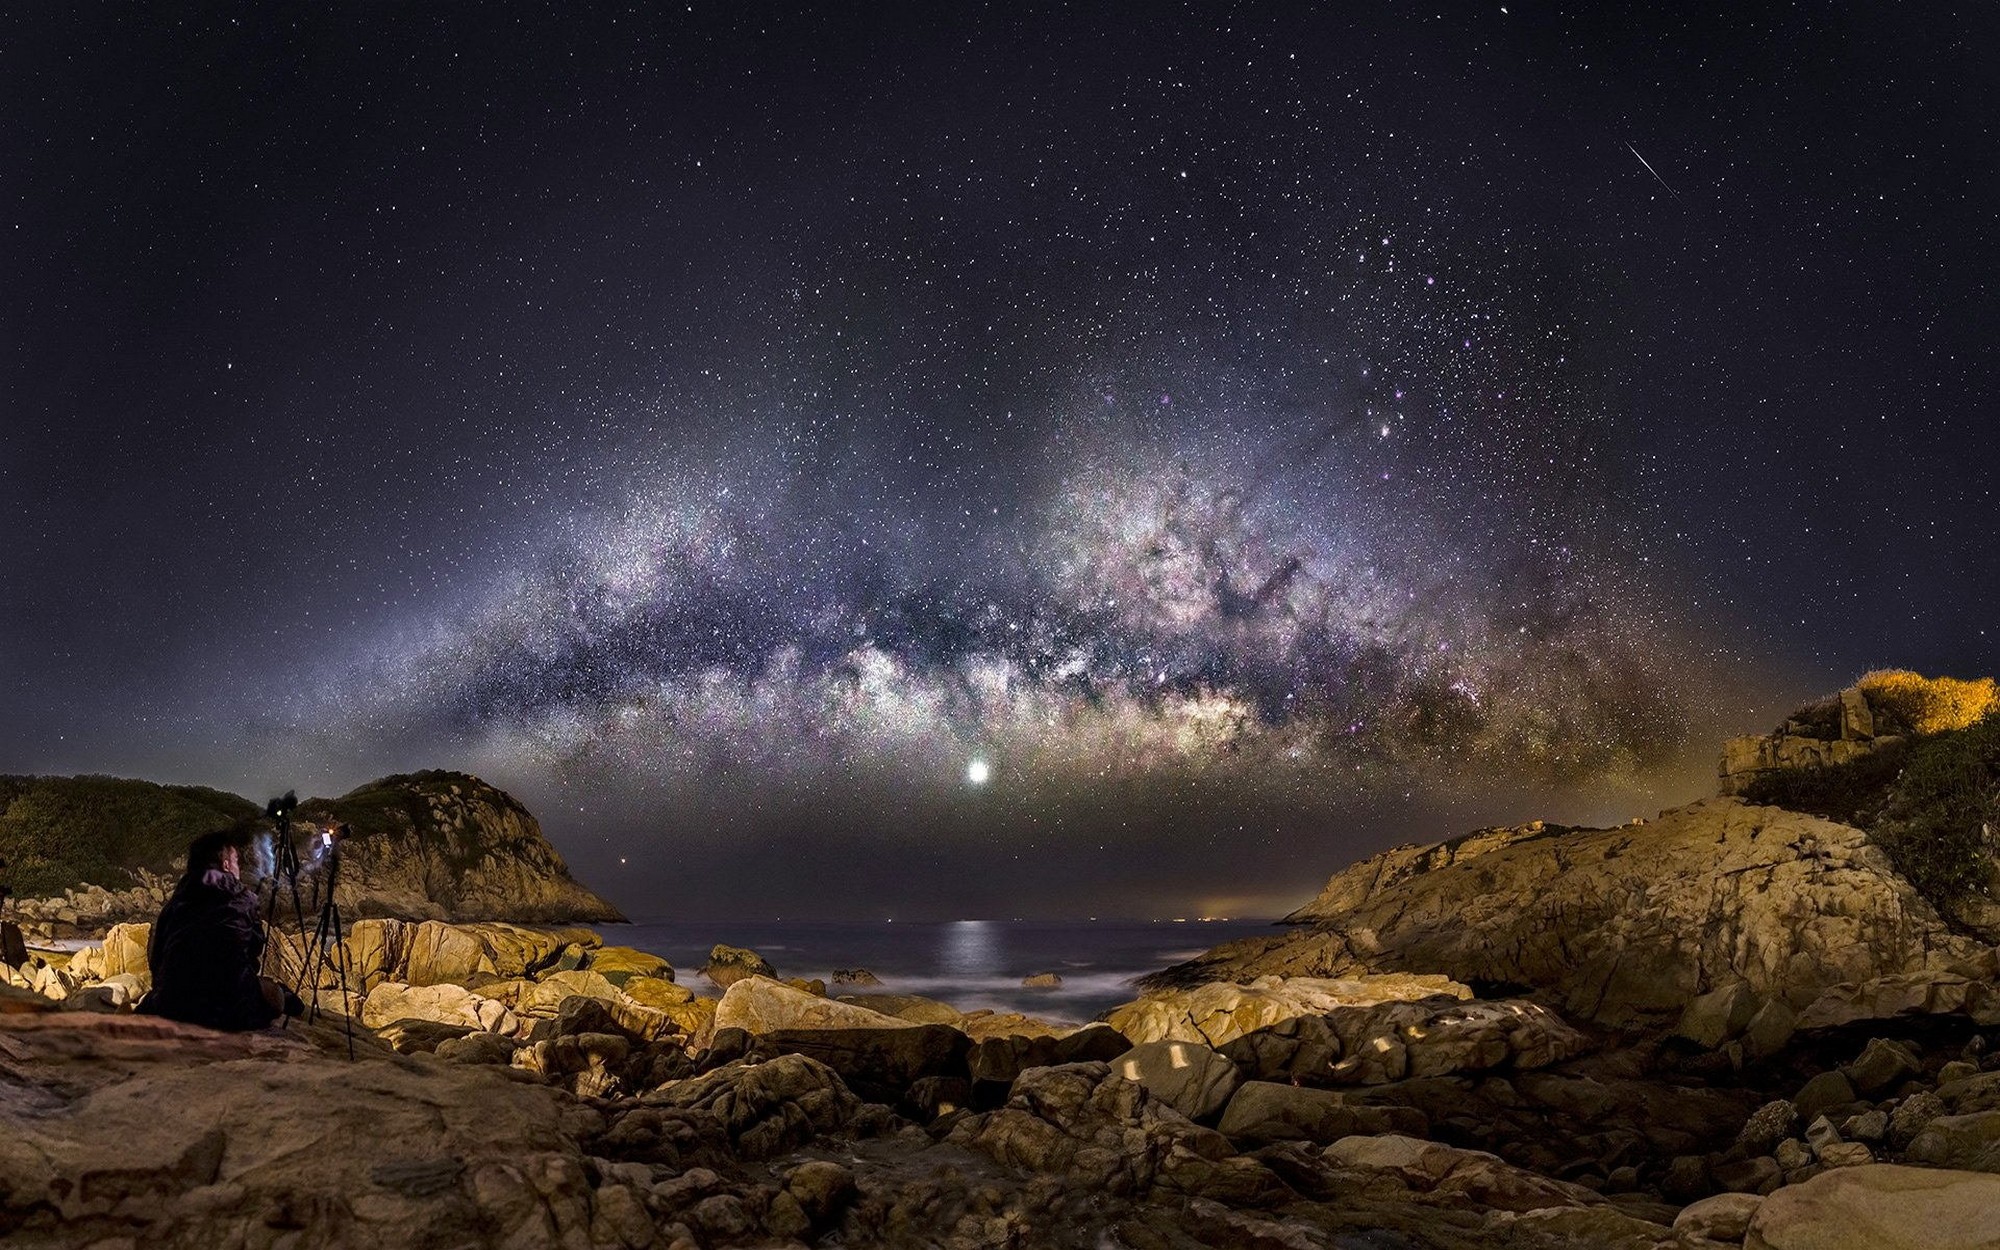 General 2000x1250 nature landscape Milky Way galaxy photographer long exposure Moon starry night sea rocks coast